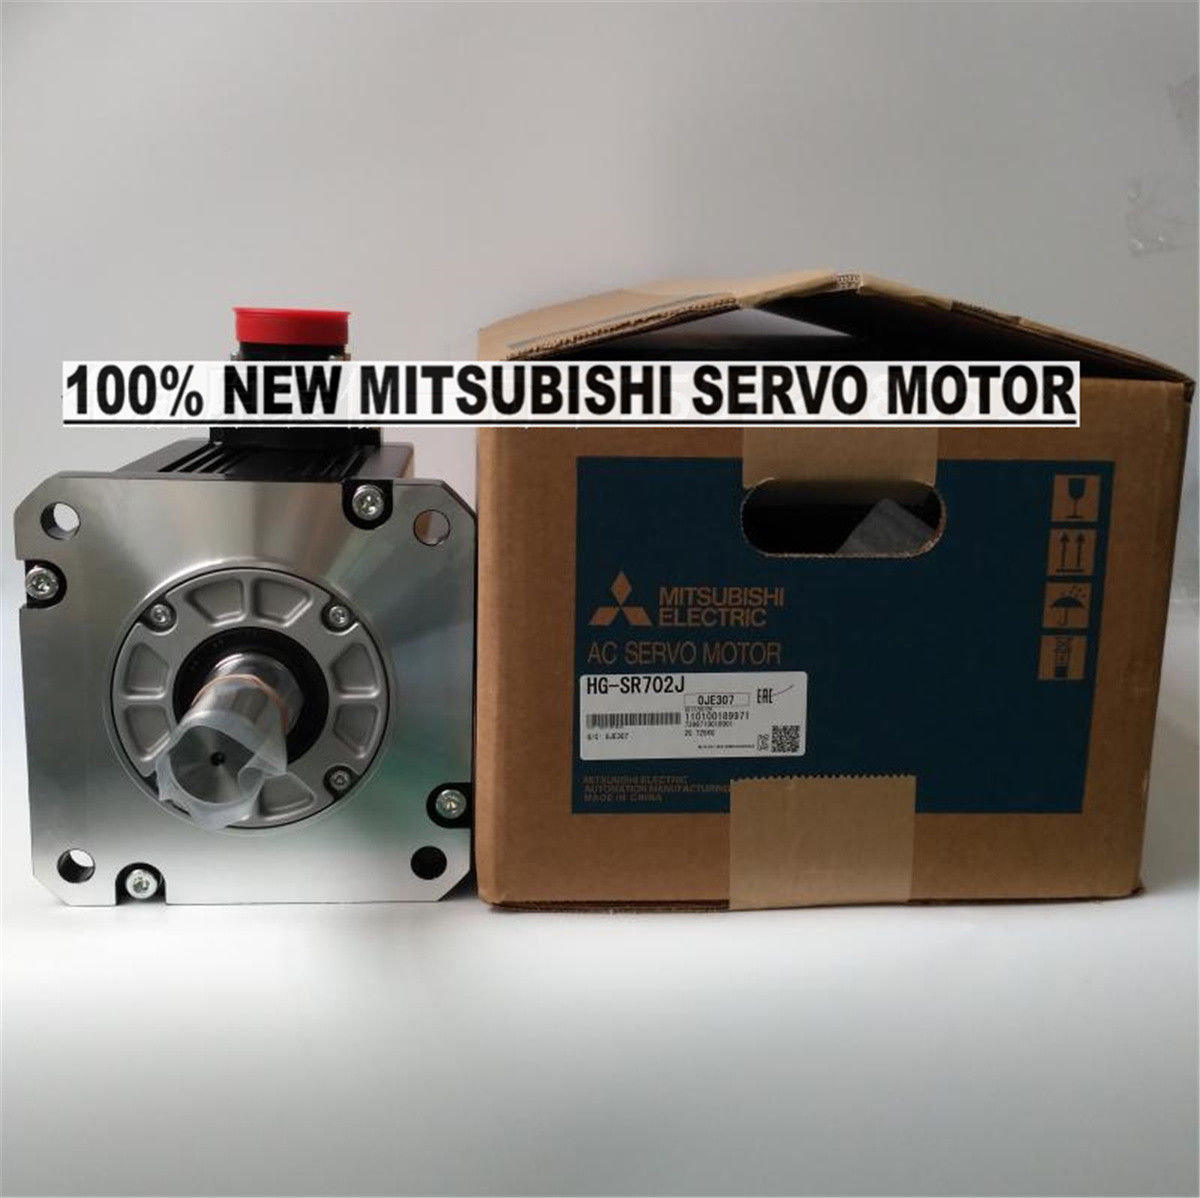 NEW Mitsubishi Servo Motor HG-SR702J in box HGSR702J